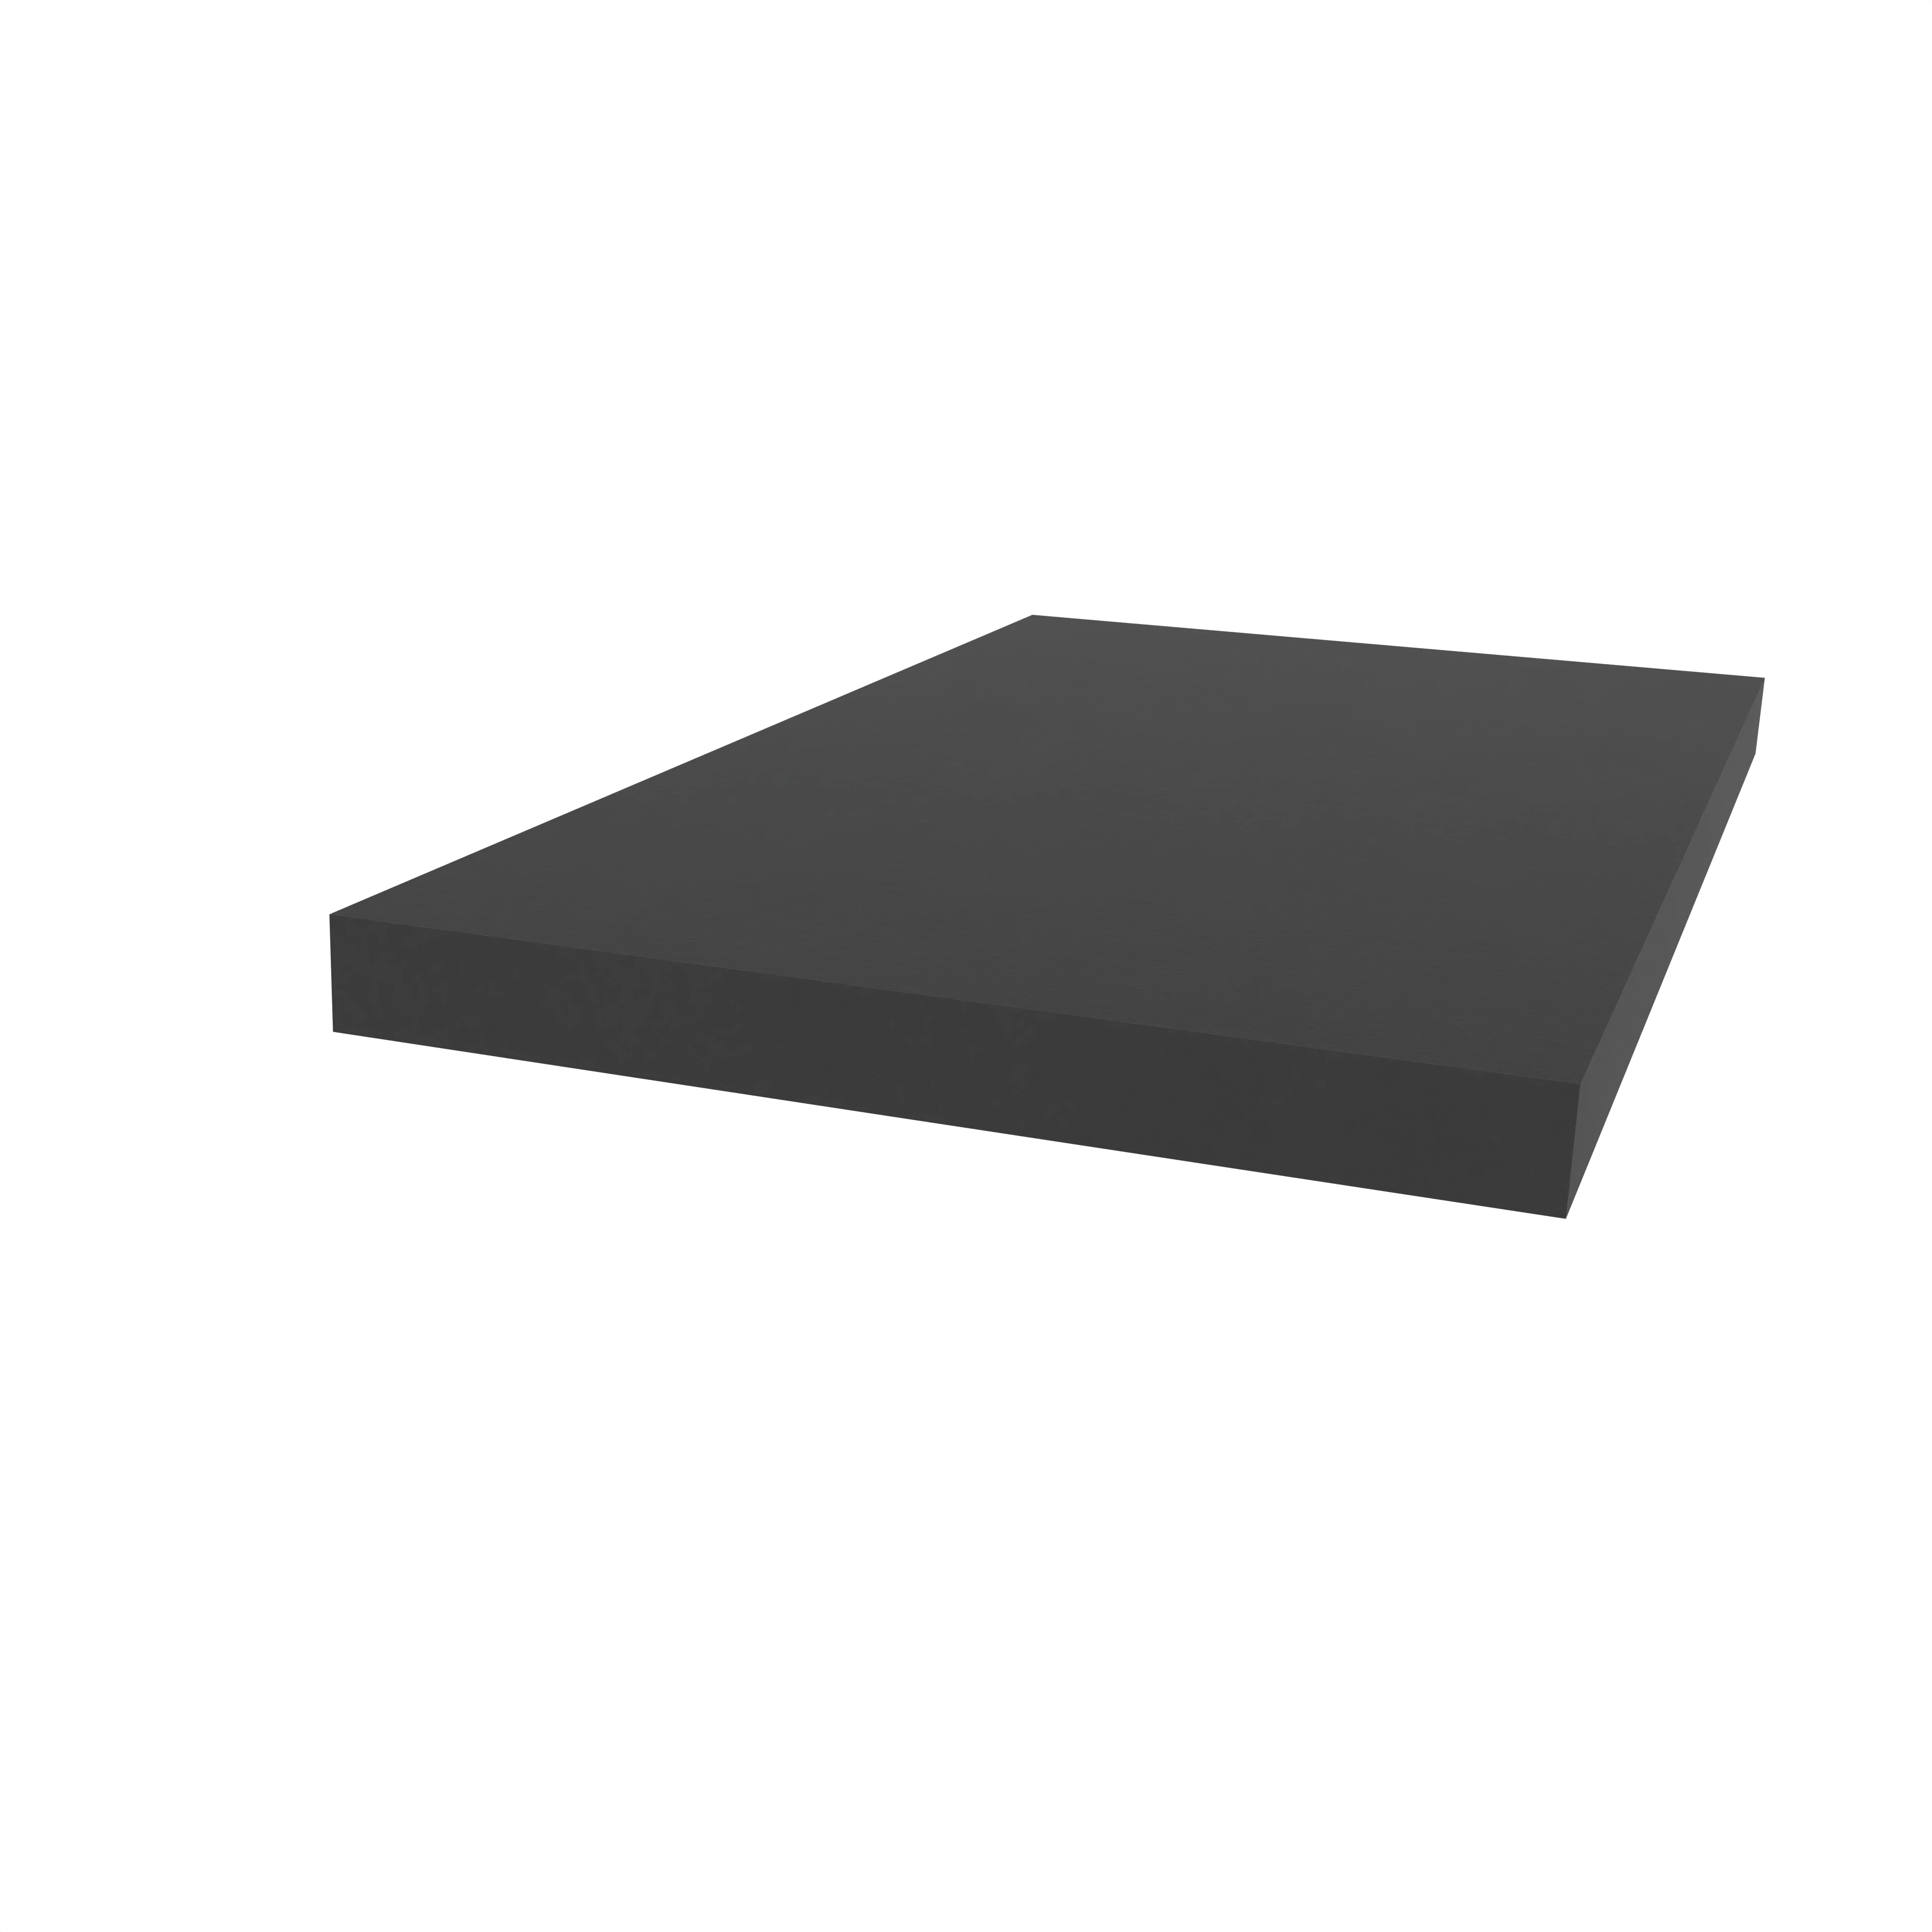 Moosgummidichtung vierkant | 5 mm Höhe | Farbe: schwarz